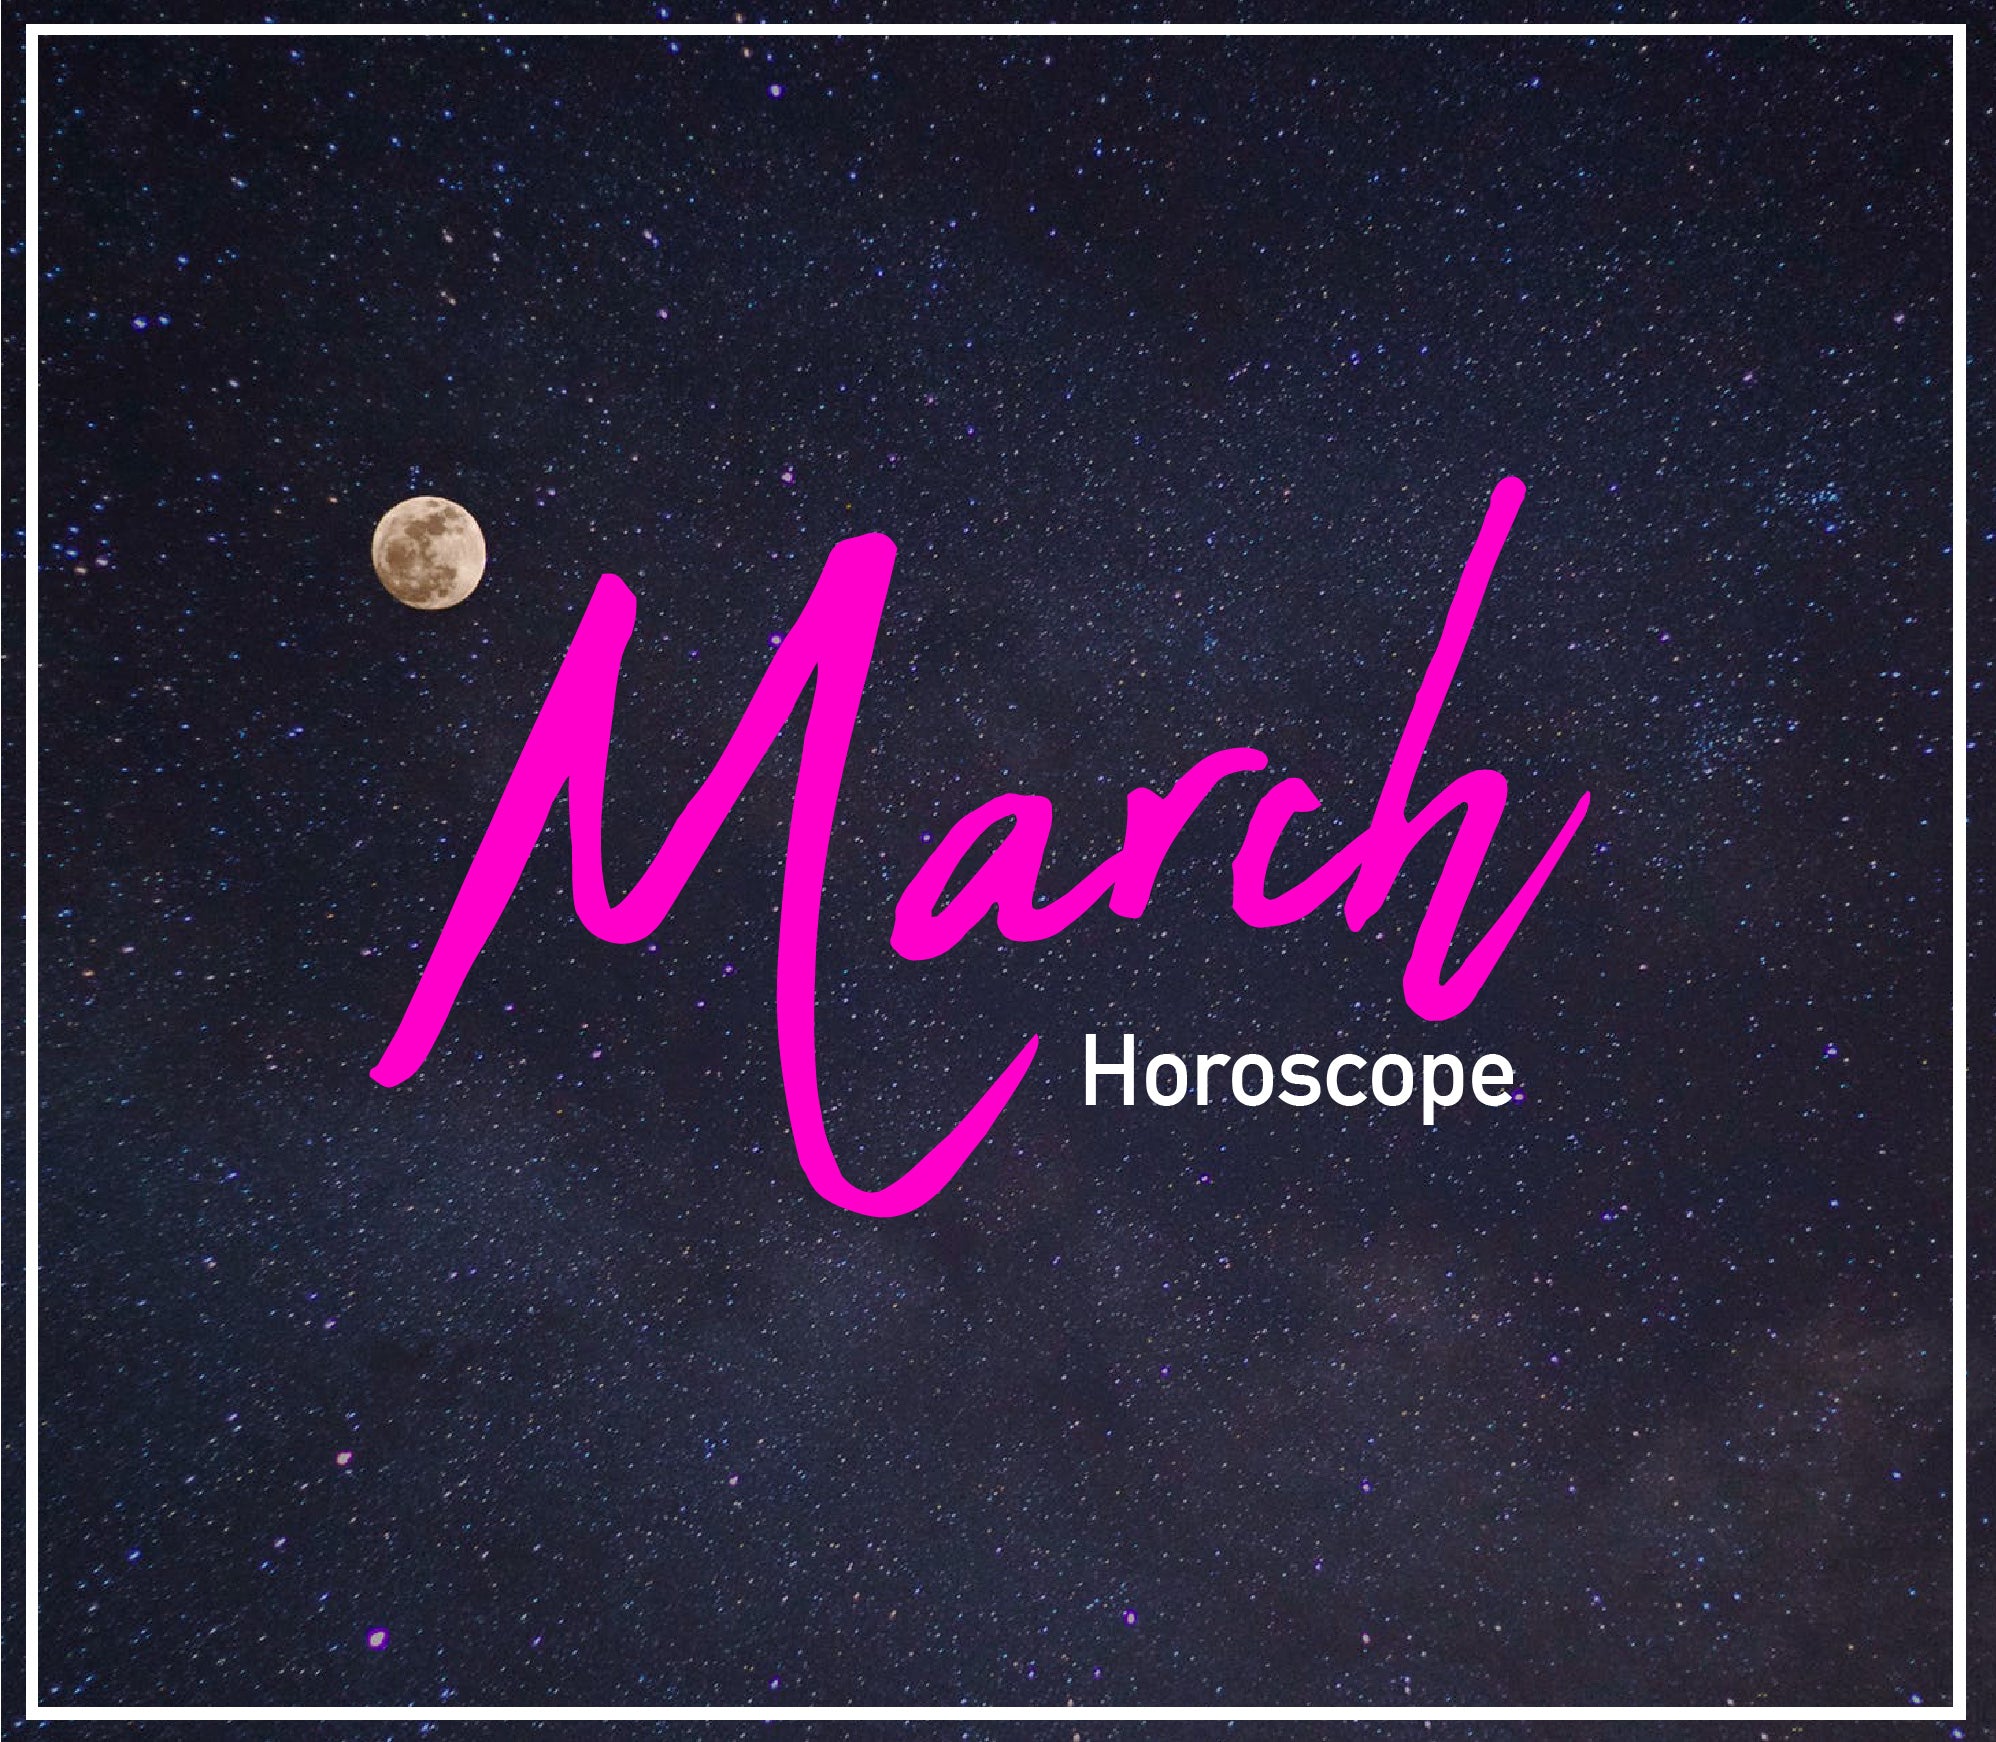 March Horoscope